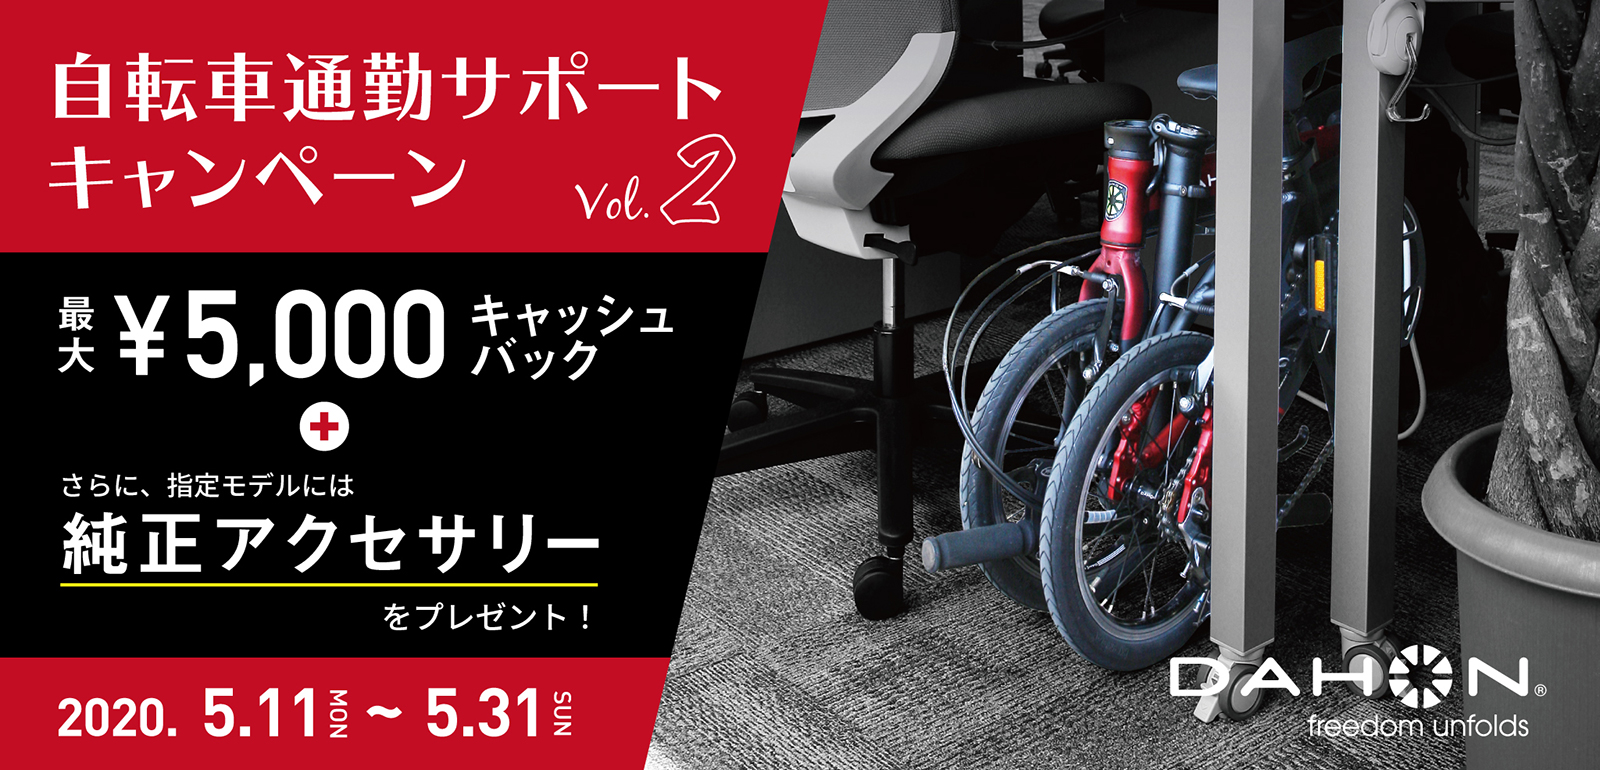 DAHON JAPAN Official Blog: 「自転車通勤サポートキャンペーン Vol.2」実施のお知らせ